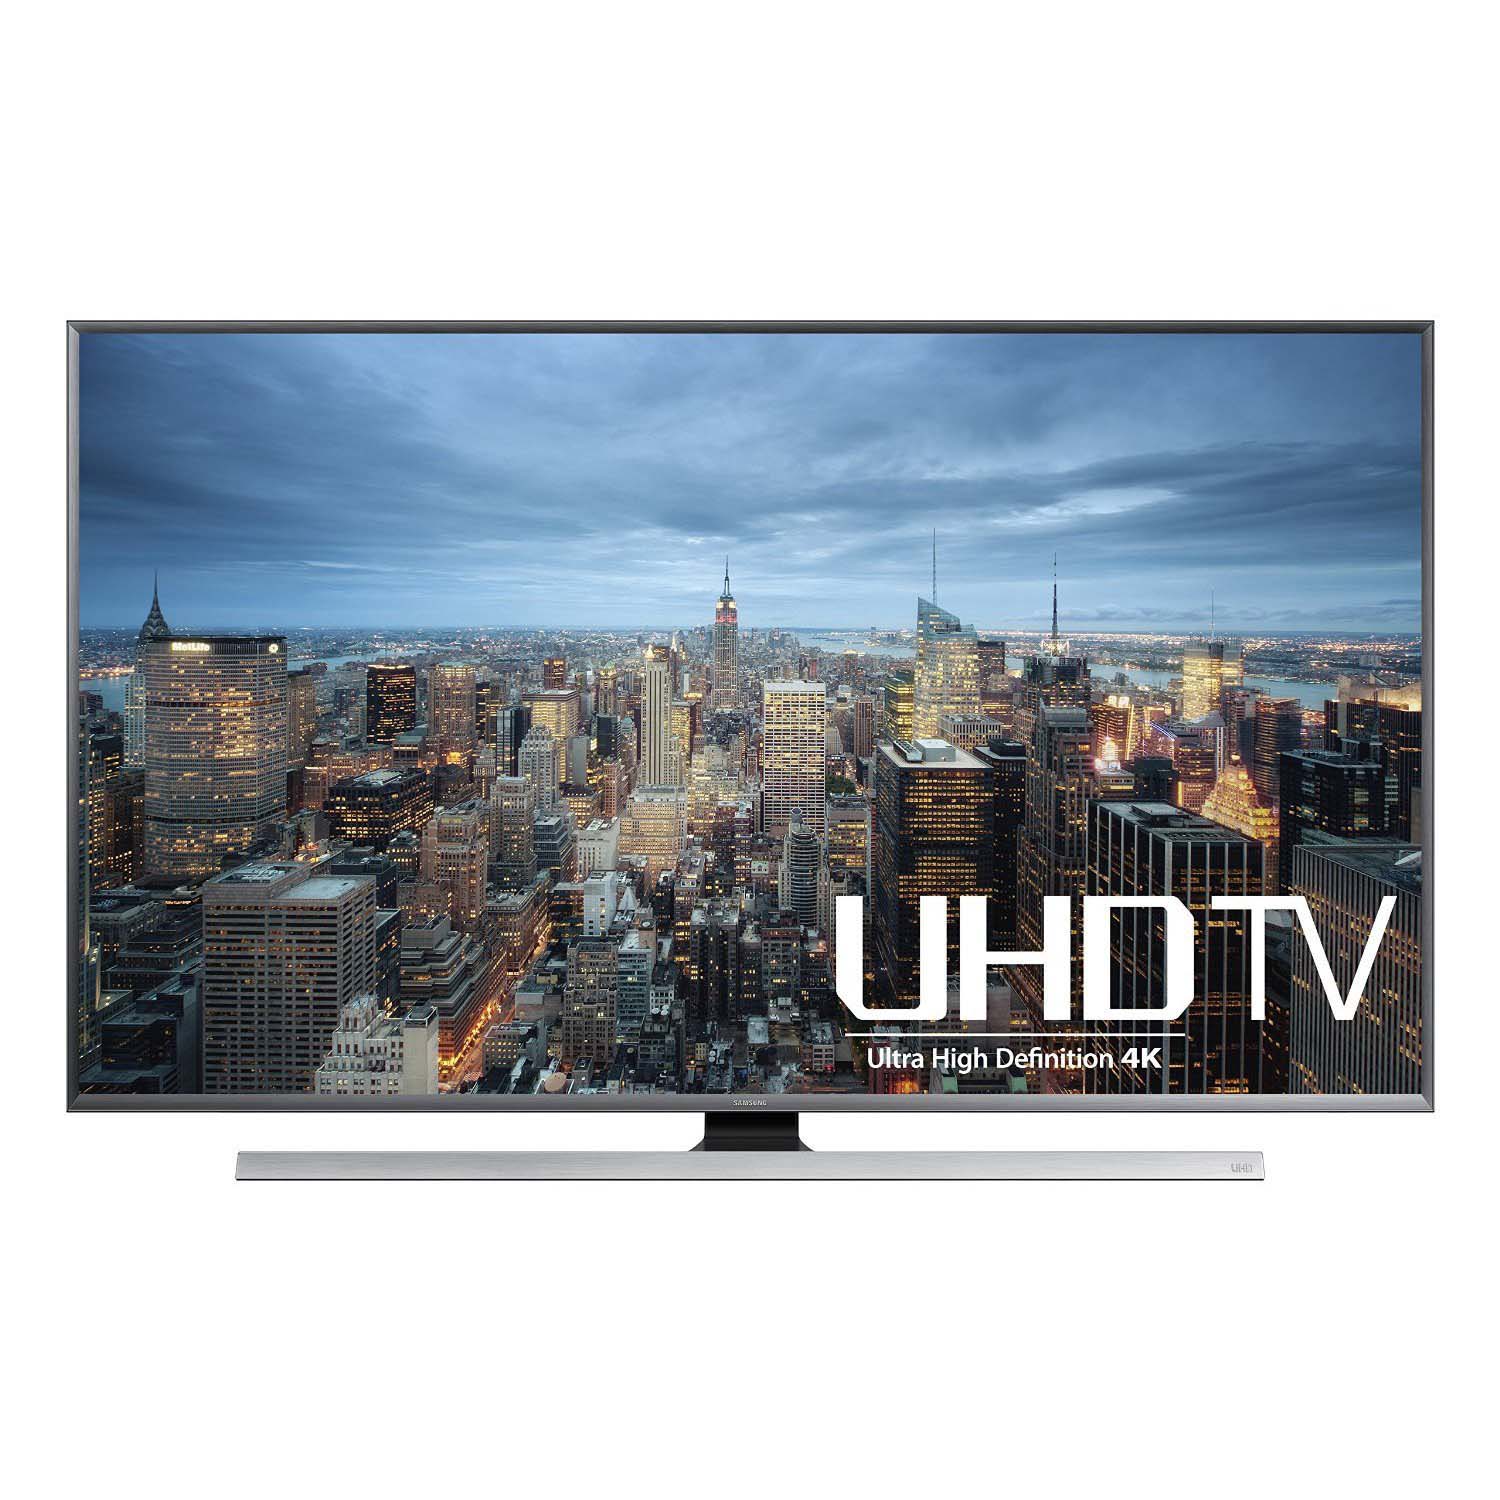 Samsung UN60JU7100 60-Inch 4K Ultra HD Smart LED TV (2015 Model) *관부가세 별도*